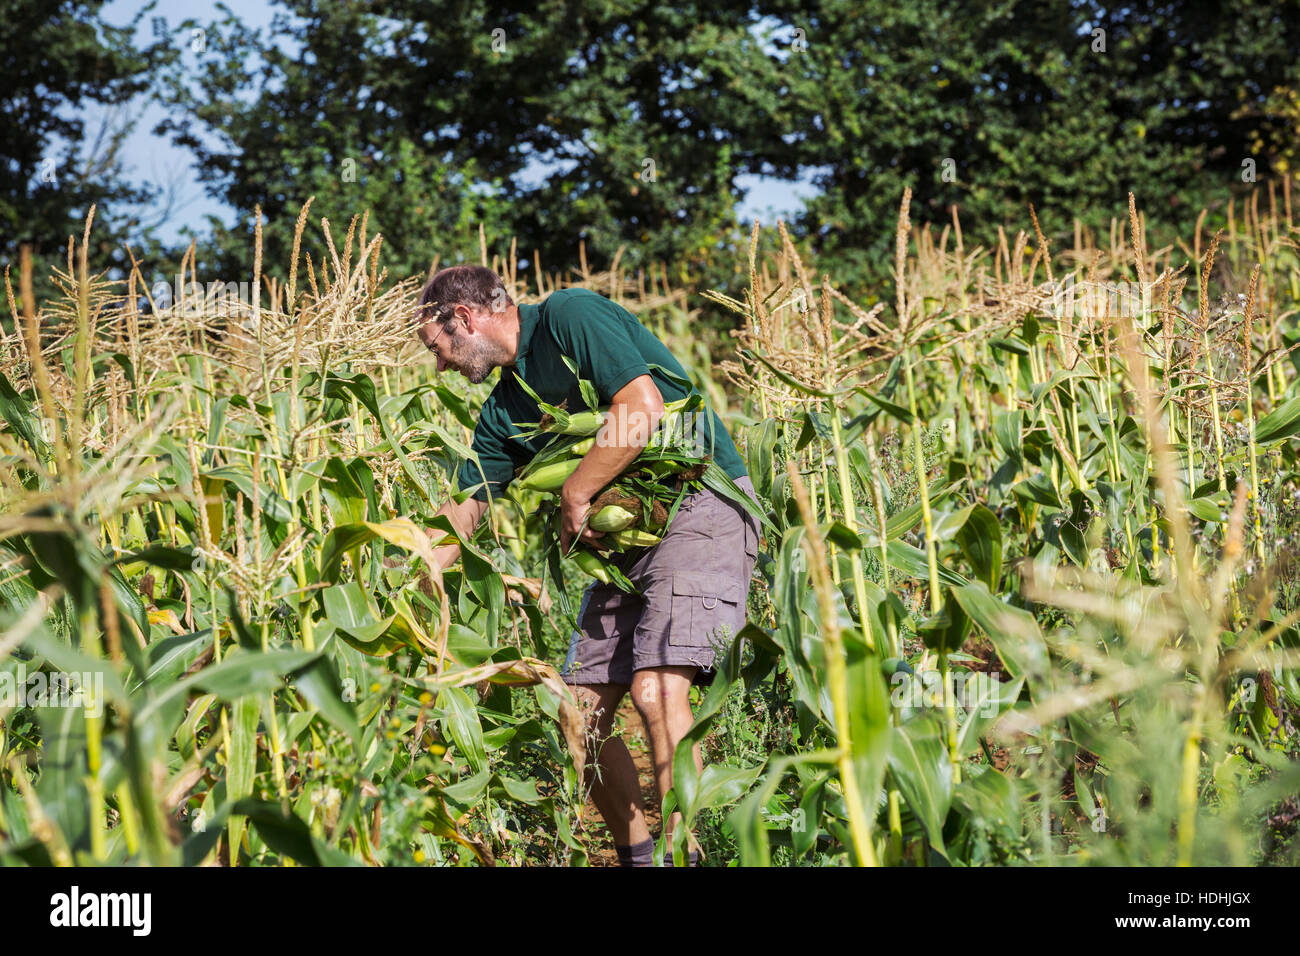 A man harvesting ripe sweet corn cobs, Stock Photo